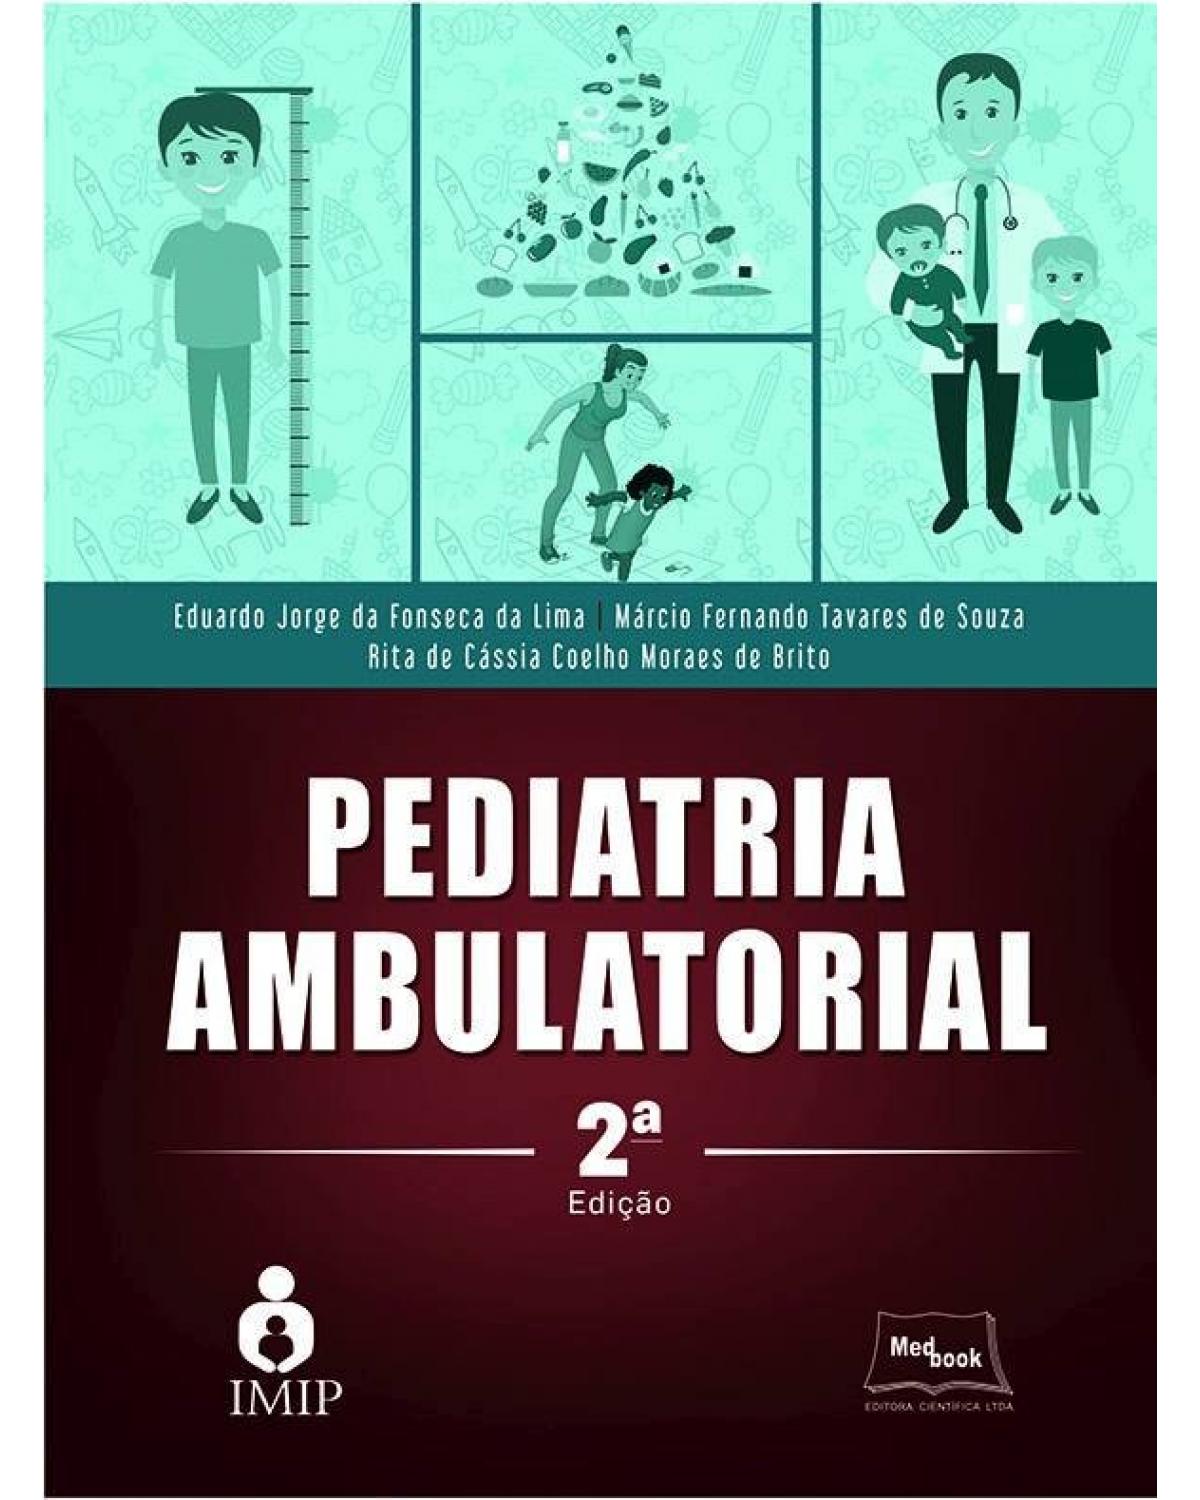 Pediatria ambulatorial - 2ª Edição | 2017